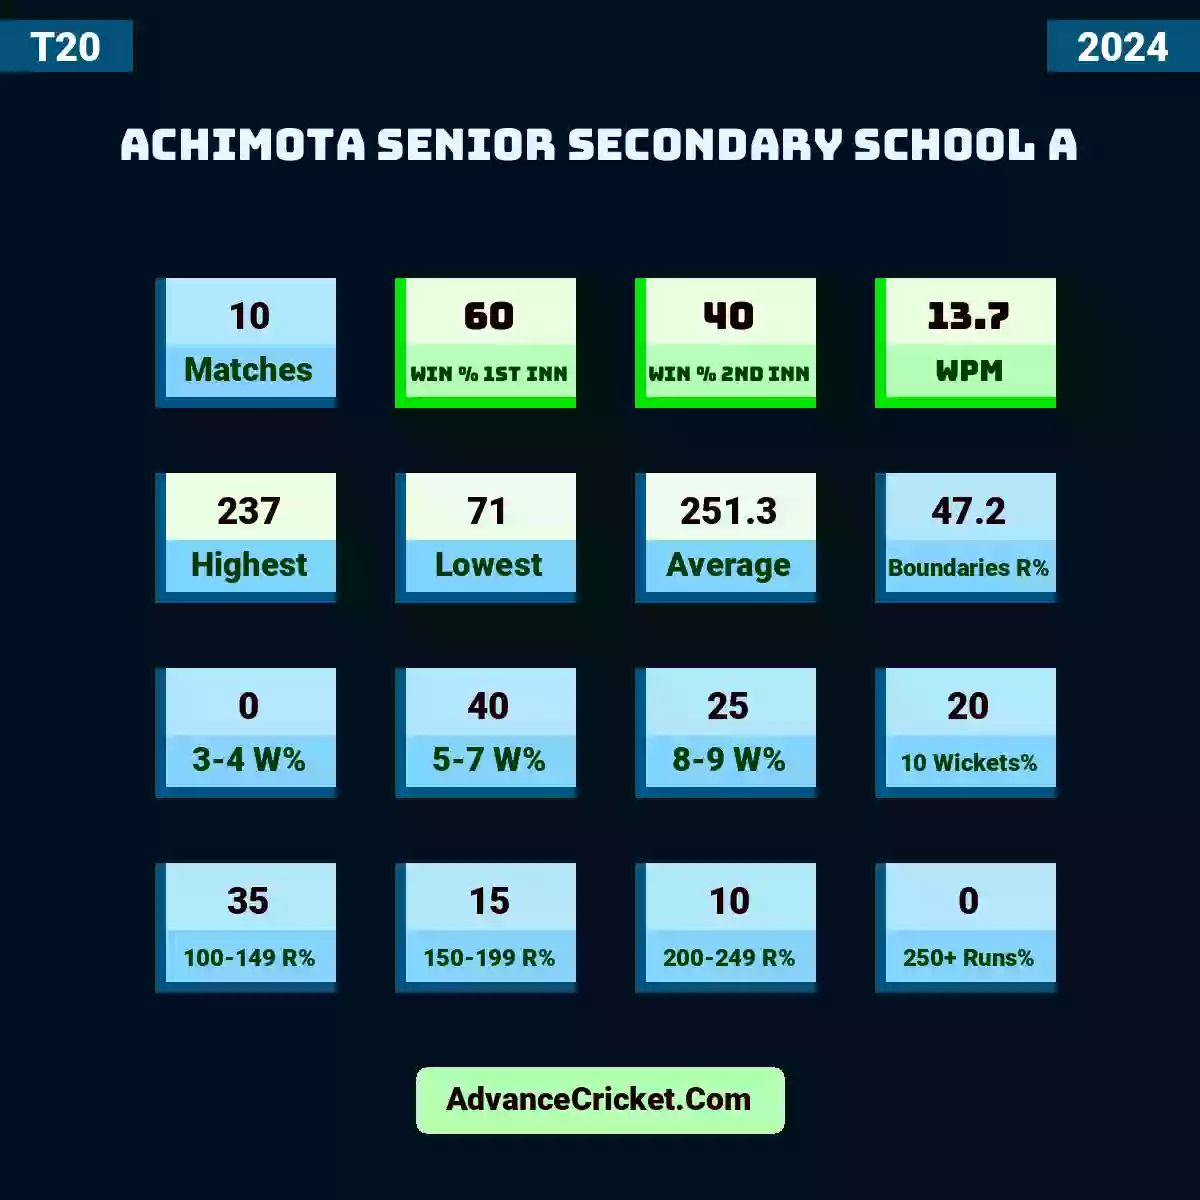 Image showing Achimota Senior Secondary School A with Matches: 10, Win % 1st Inn: 60, Win % 2nd Inn: 40, WPM: 13.7, Highest: 237, Lowest: 71, Average: 251.3, Boundaries R%: 47.2, 3-4 W%: 0, 5-7 W%: 40, 8-9 W%: 25, 10 Wickets%: 20, 100-149 R%: 35, 150-199 R%: 15, 200-249 R%: 10, 250+ Runs%: 0.